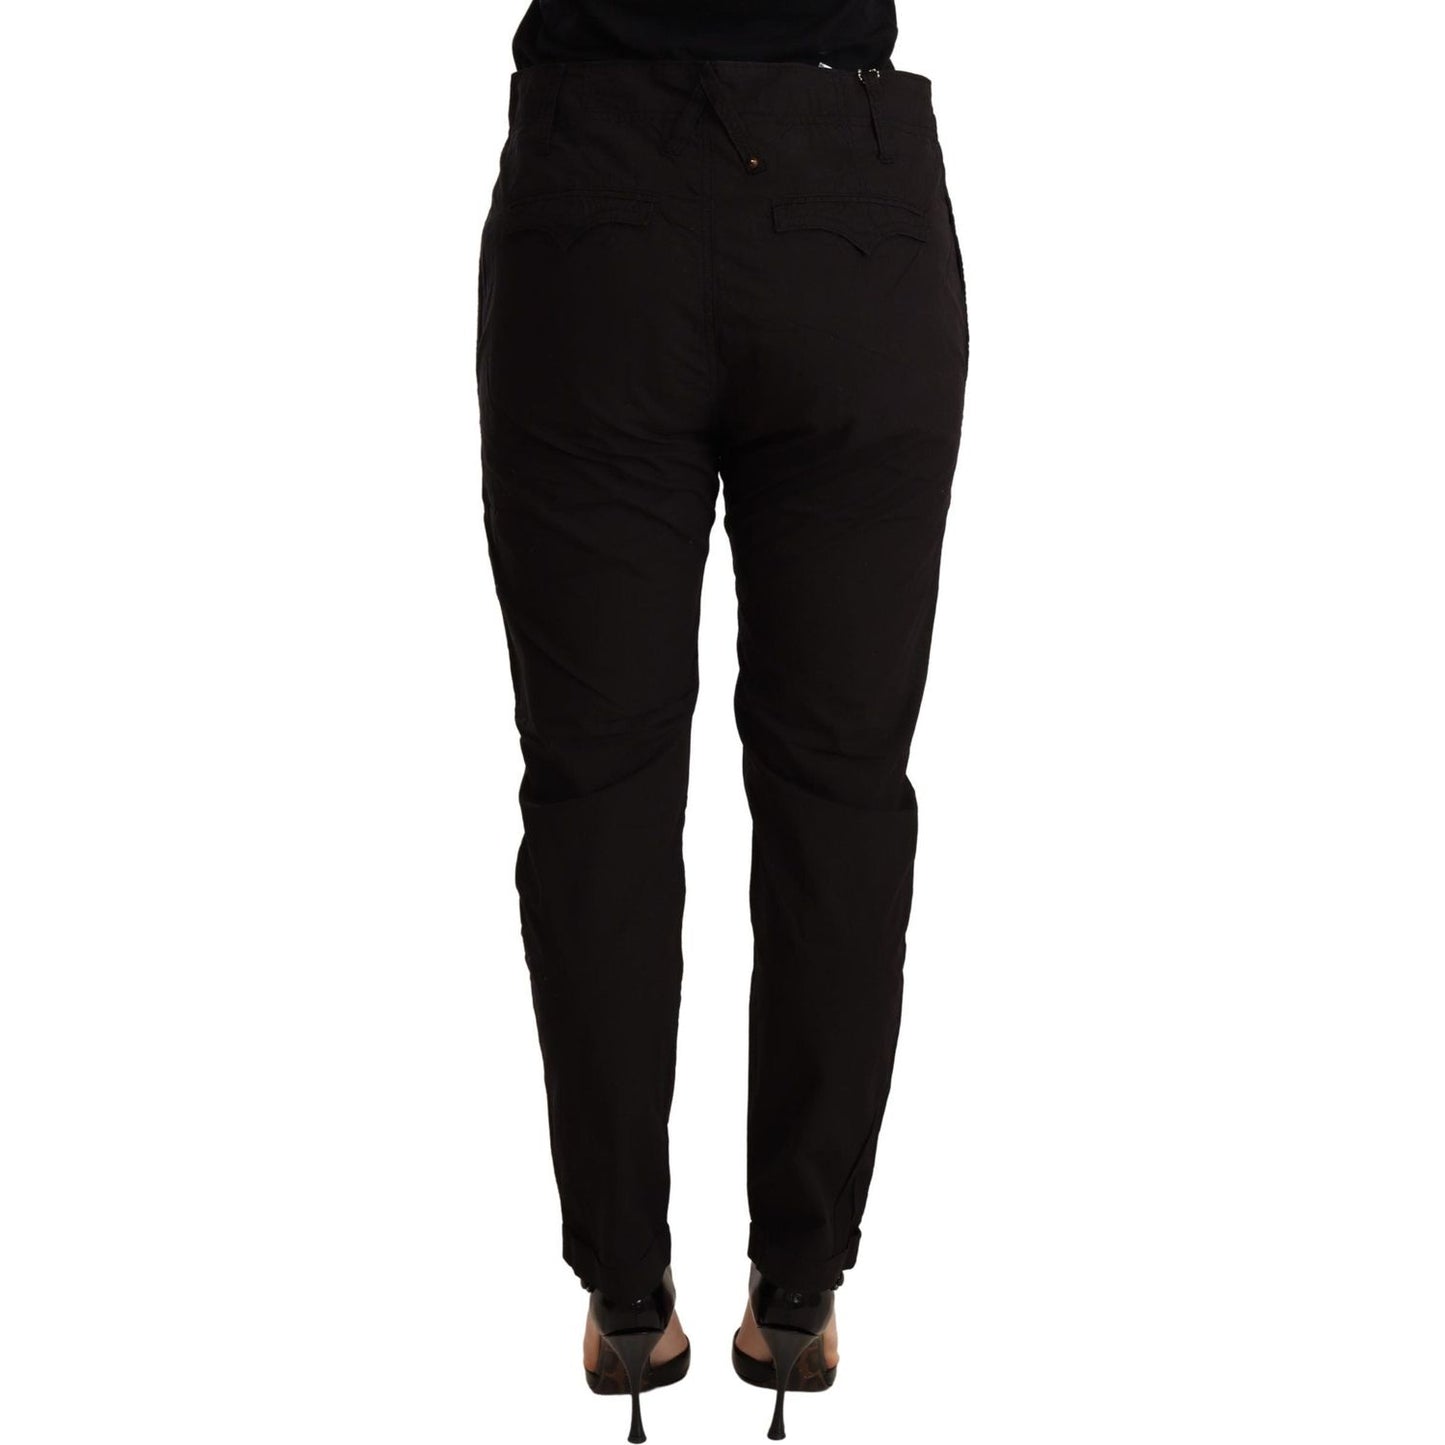 CYCLE Black Mid Waist BAGGY Fit Skinny Trouser black-mid-waist-baggy-fit-skinny-trouser WOMAN TROUSERS IMG_5114-scaled-607929e0-4e3.jpg